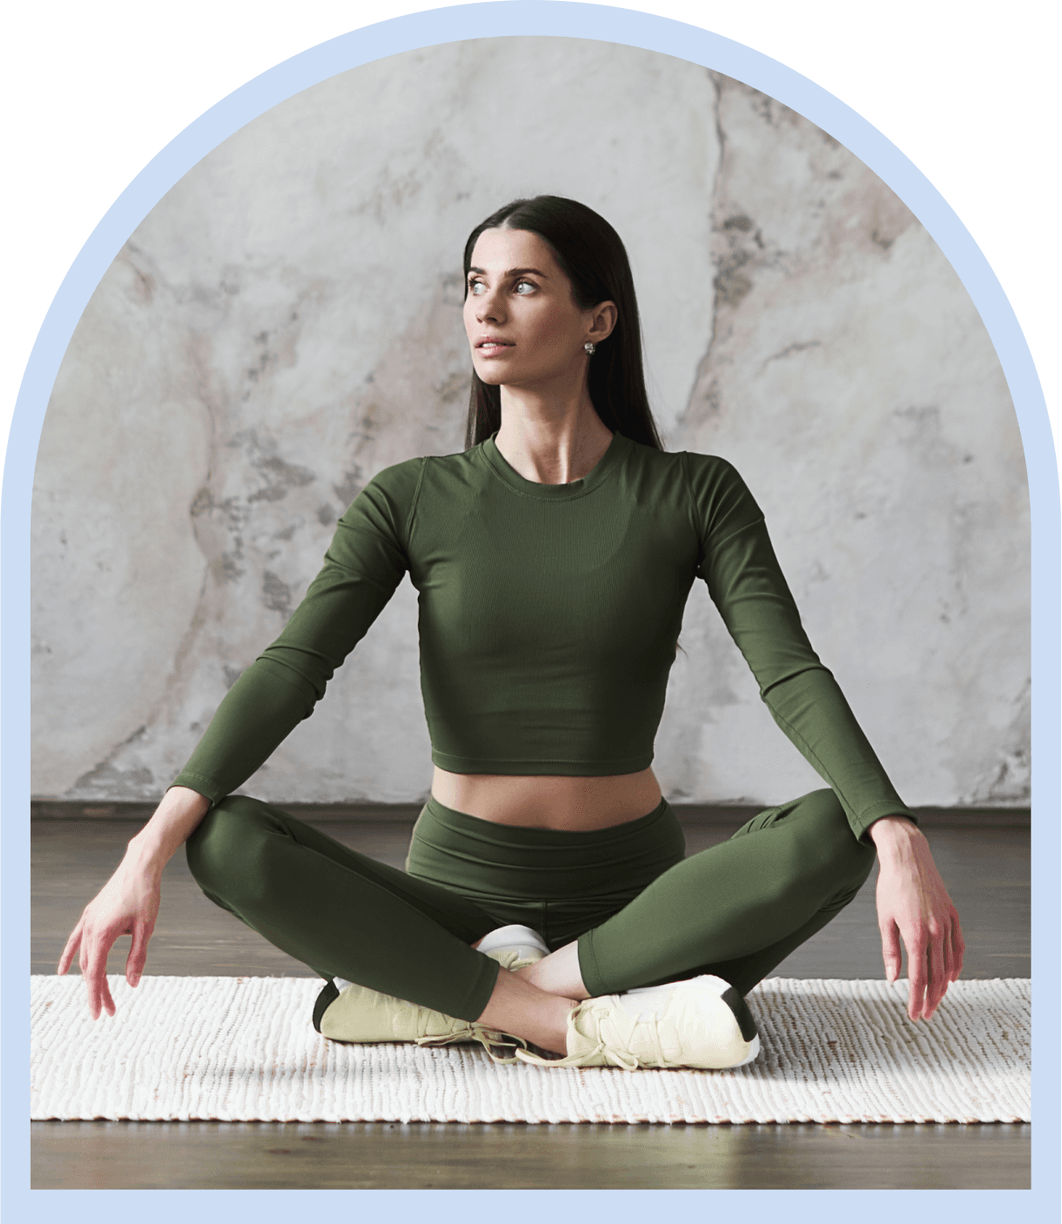 Women pose yoga